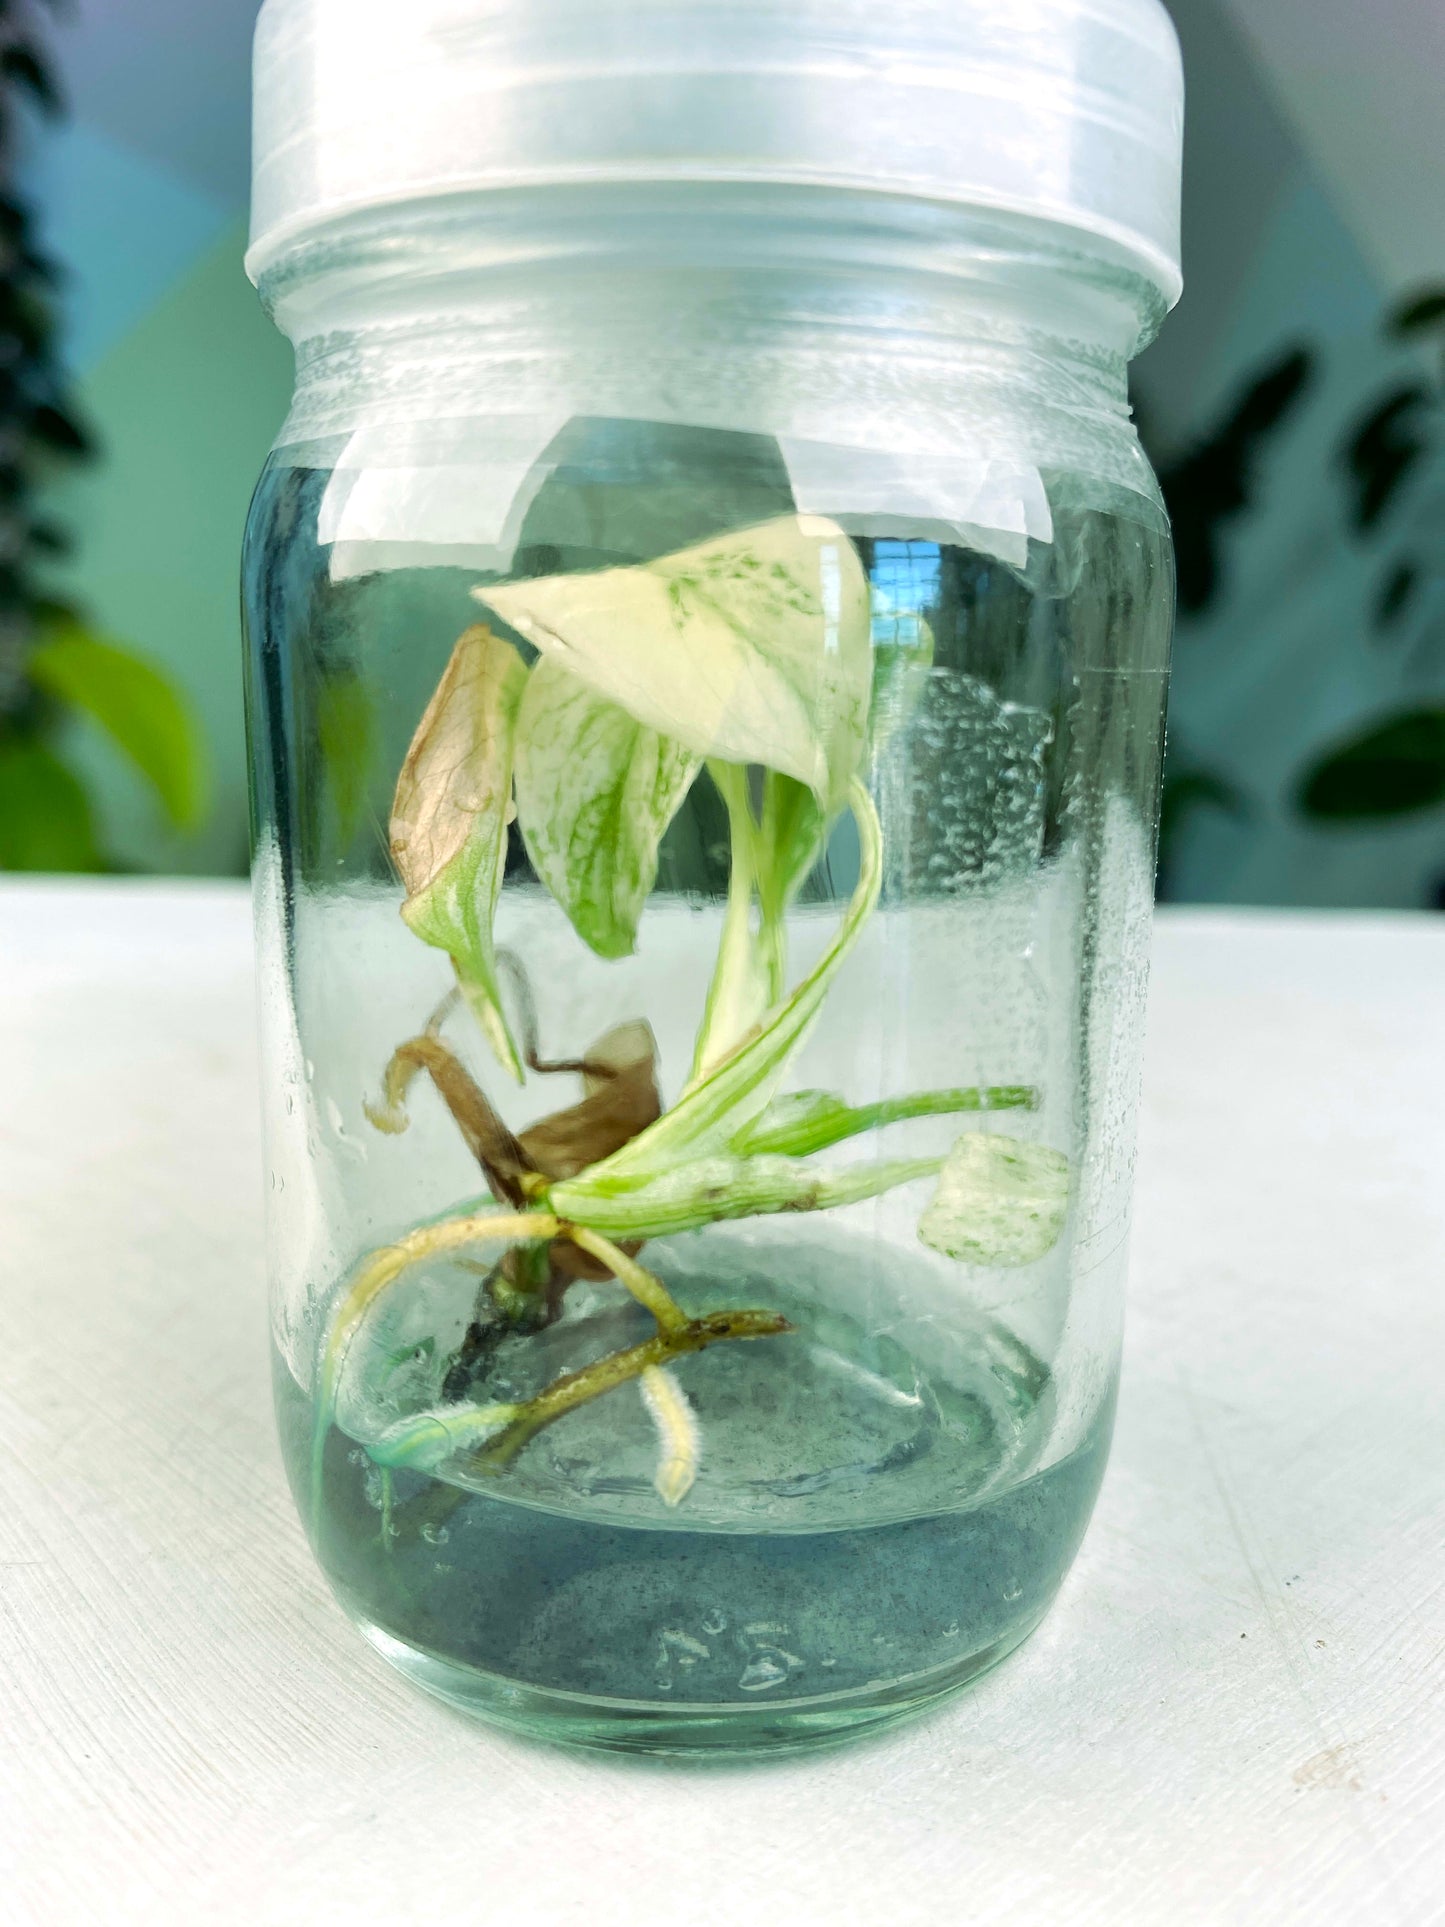 Monstera deliciosa "Mint" variegated (3:K4) [1417] | Rare Aroid | Exact Plant